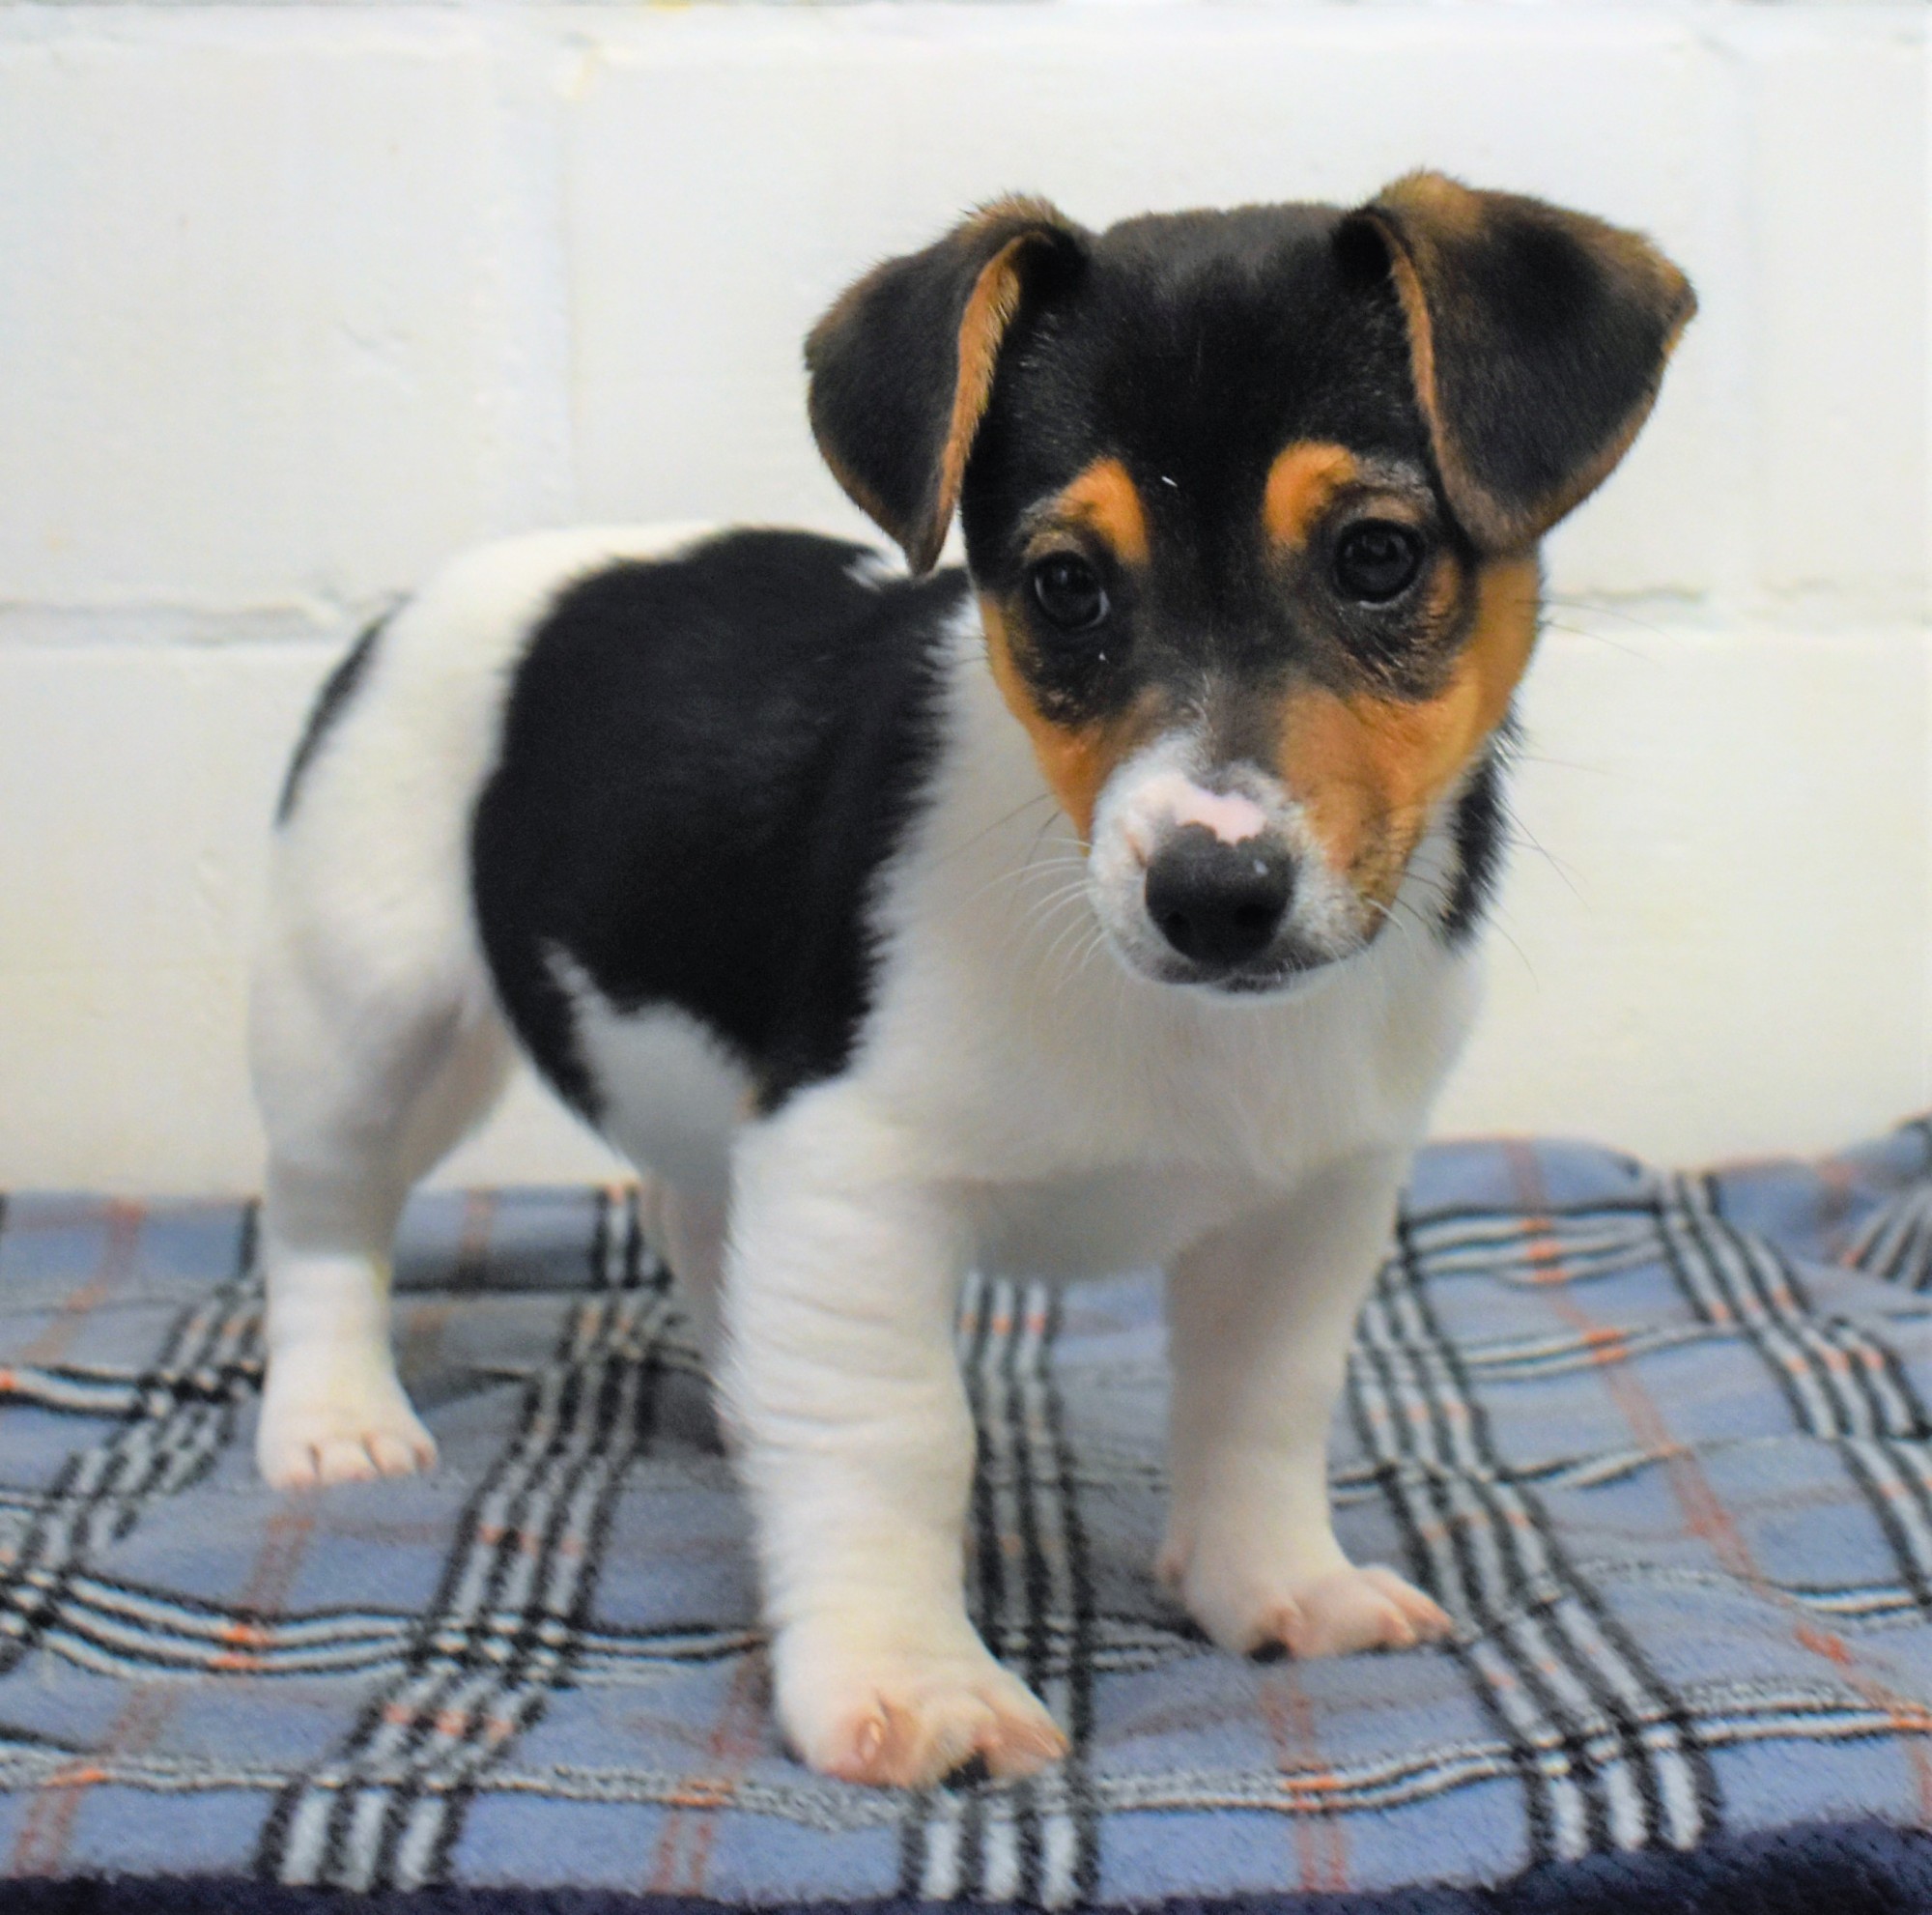 Jack Russell | Houssin | Puppy's te koop, pup koop, hondenkweker, hondenkwekerij, rashonden